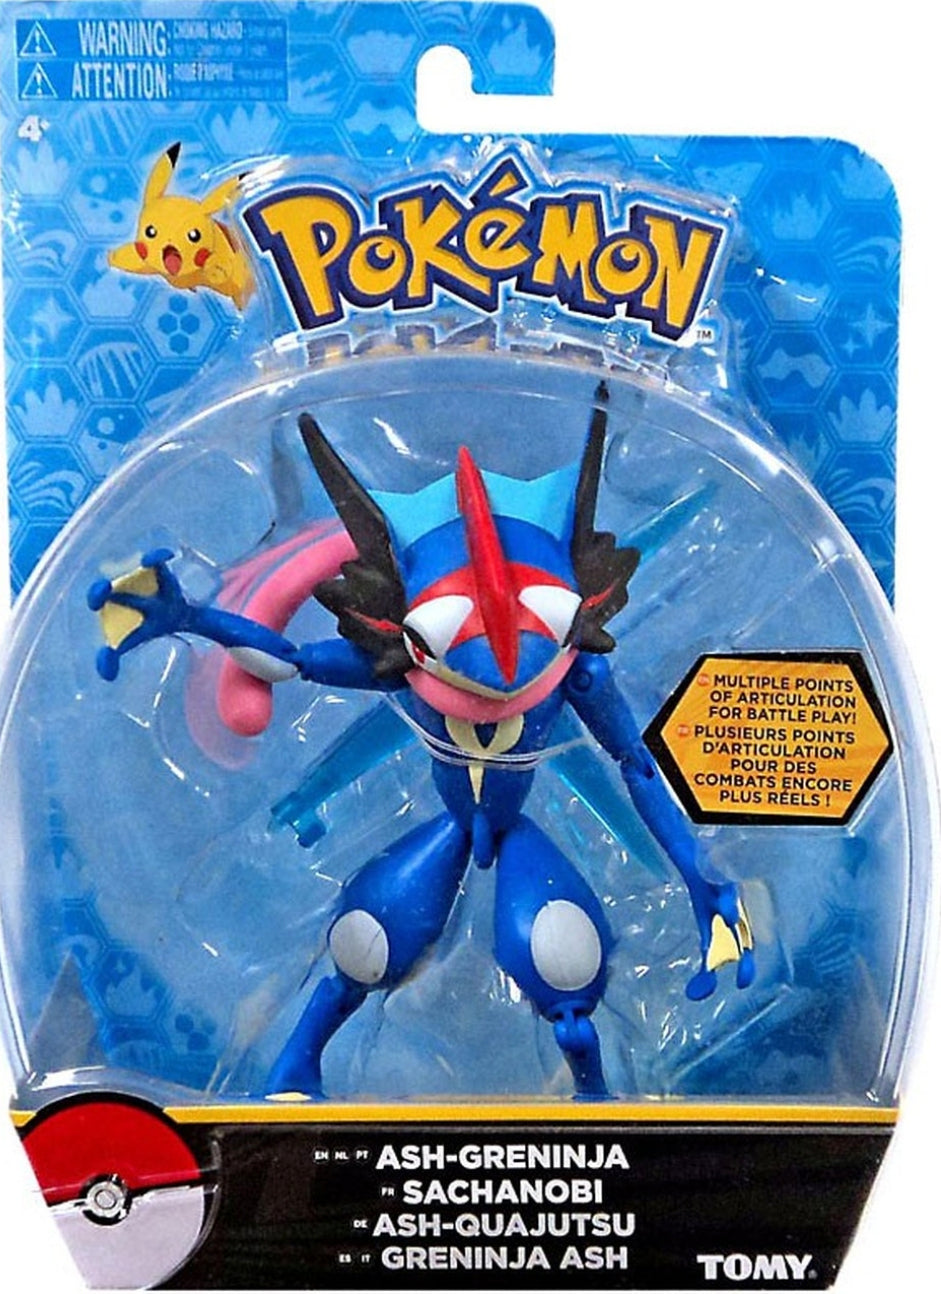 Tomy Pokemon Pocket Monster Ash-Greninja Action Figure